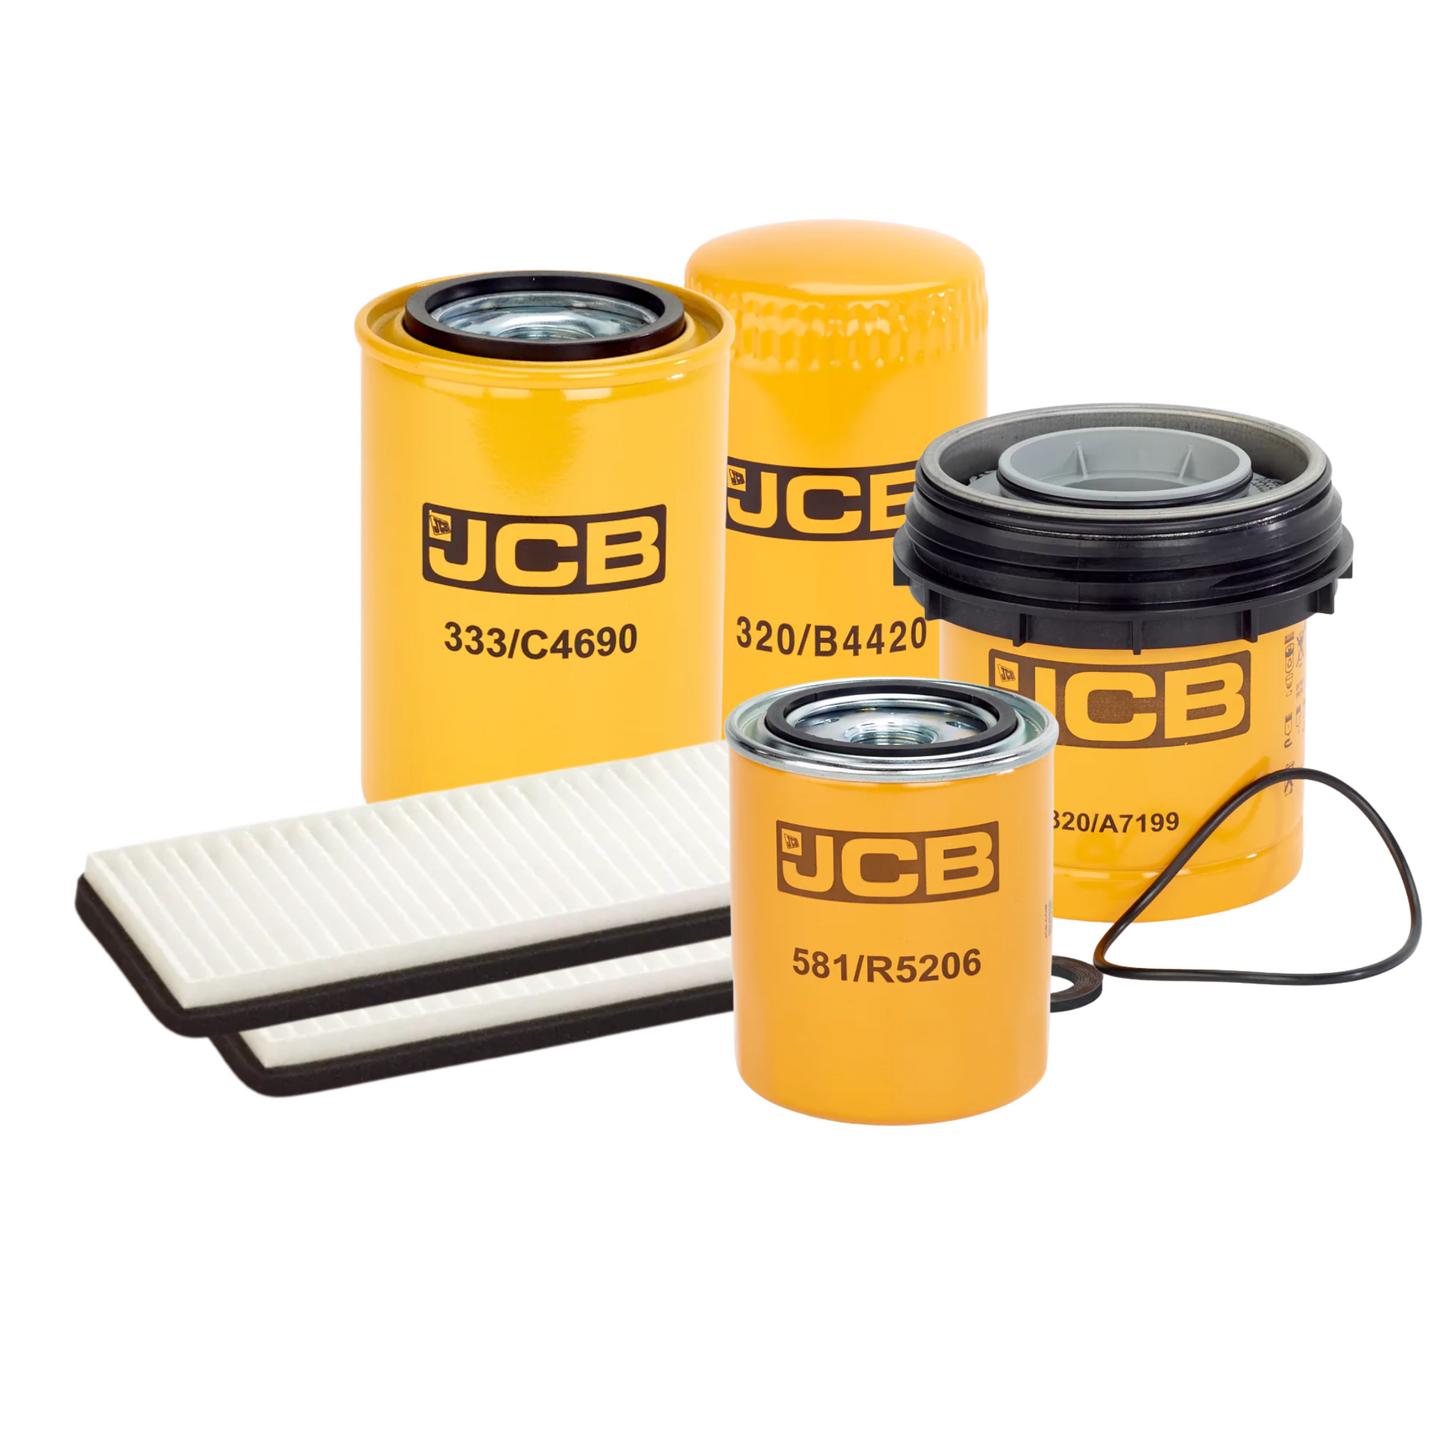 JCB 531-70 3500 Hour Filter Service Kit